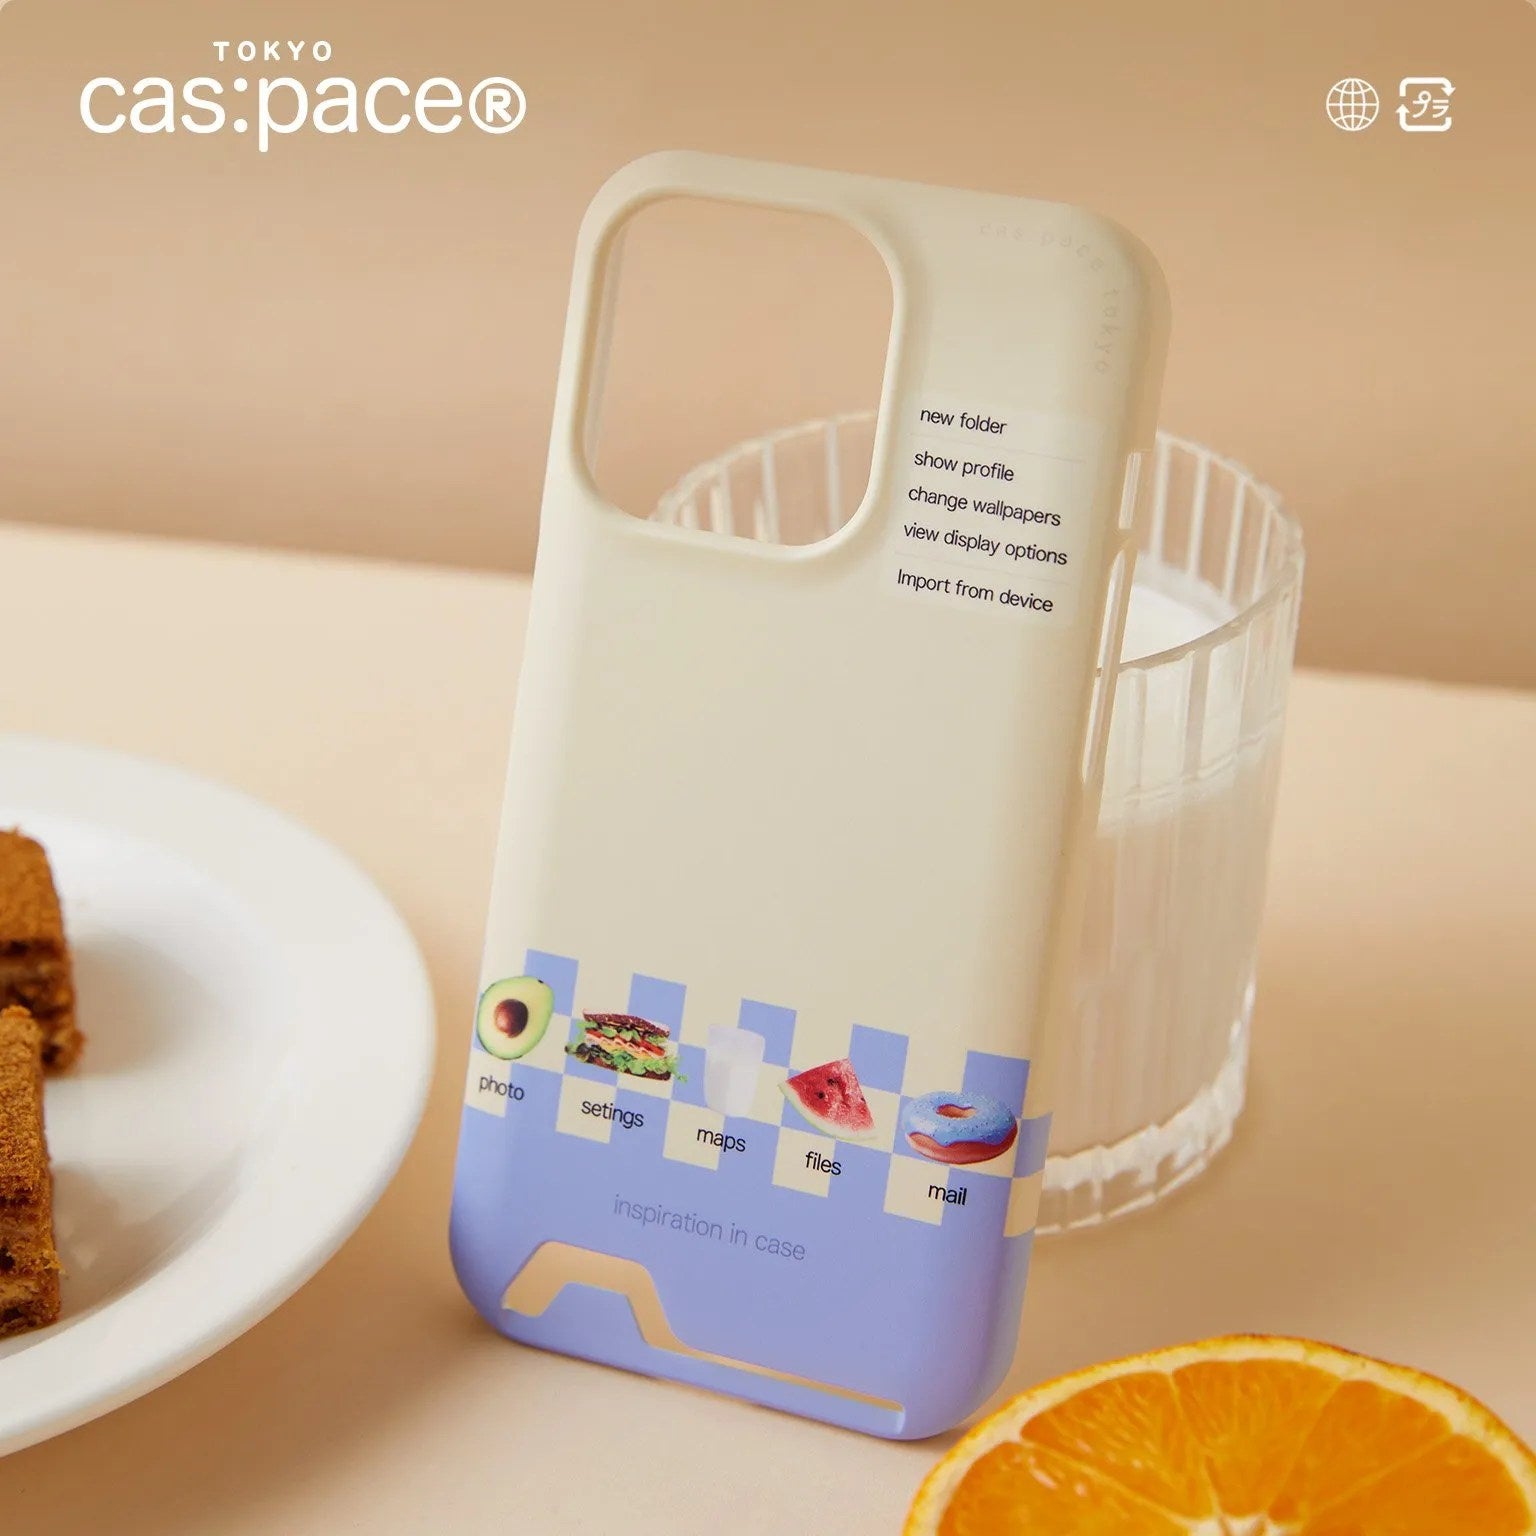 cas:pace 23A/W「食べ物アイコン」携帯ケース - cas:pace 殼空間